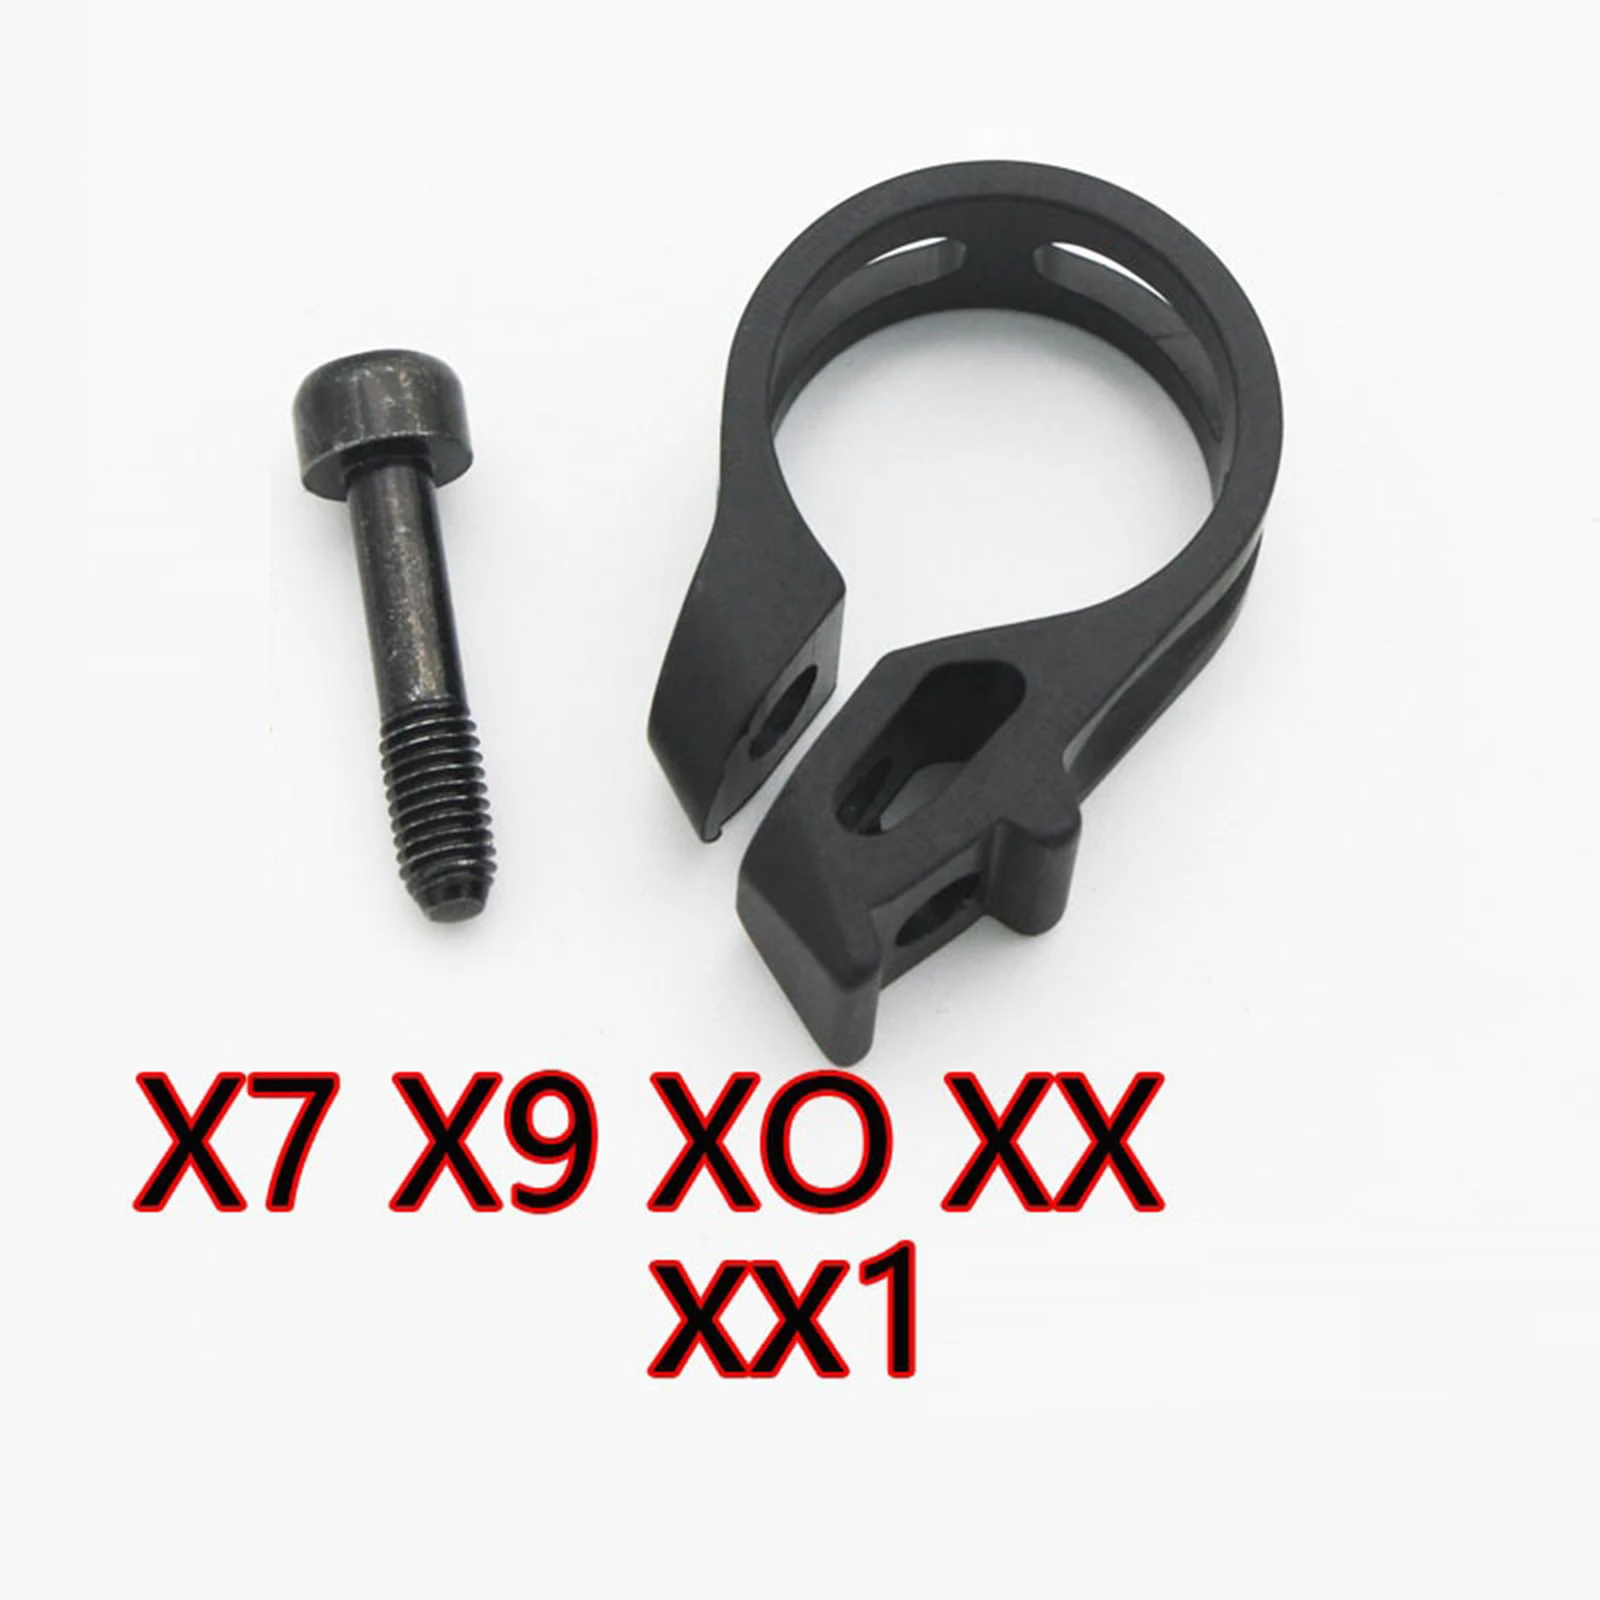 Bike   Clamp Triggler Clip Fixed Ring For  X7 X9 X0 XX XO1 XX1